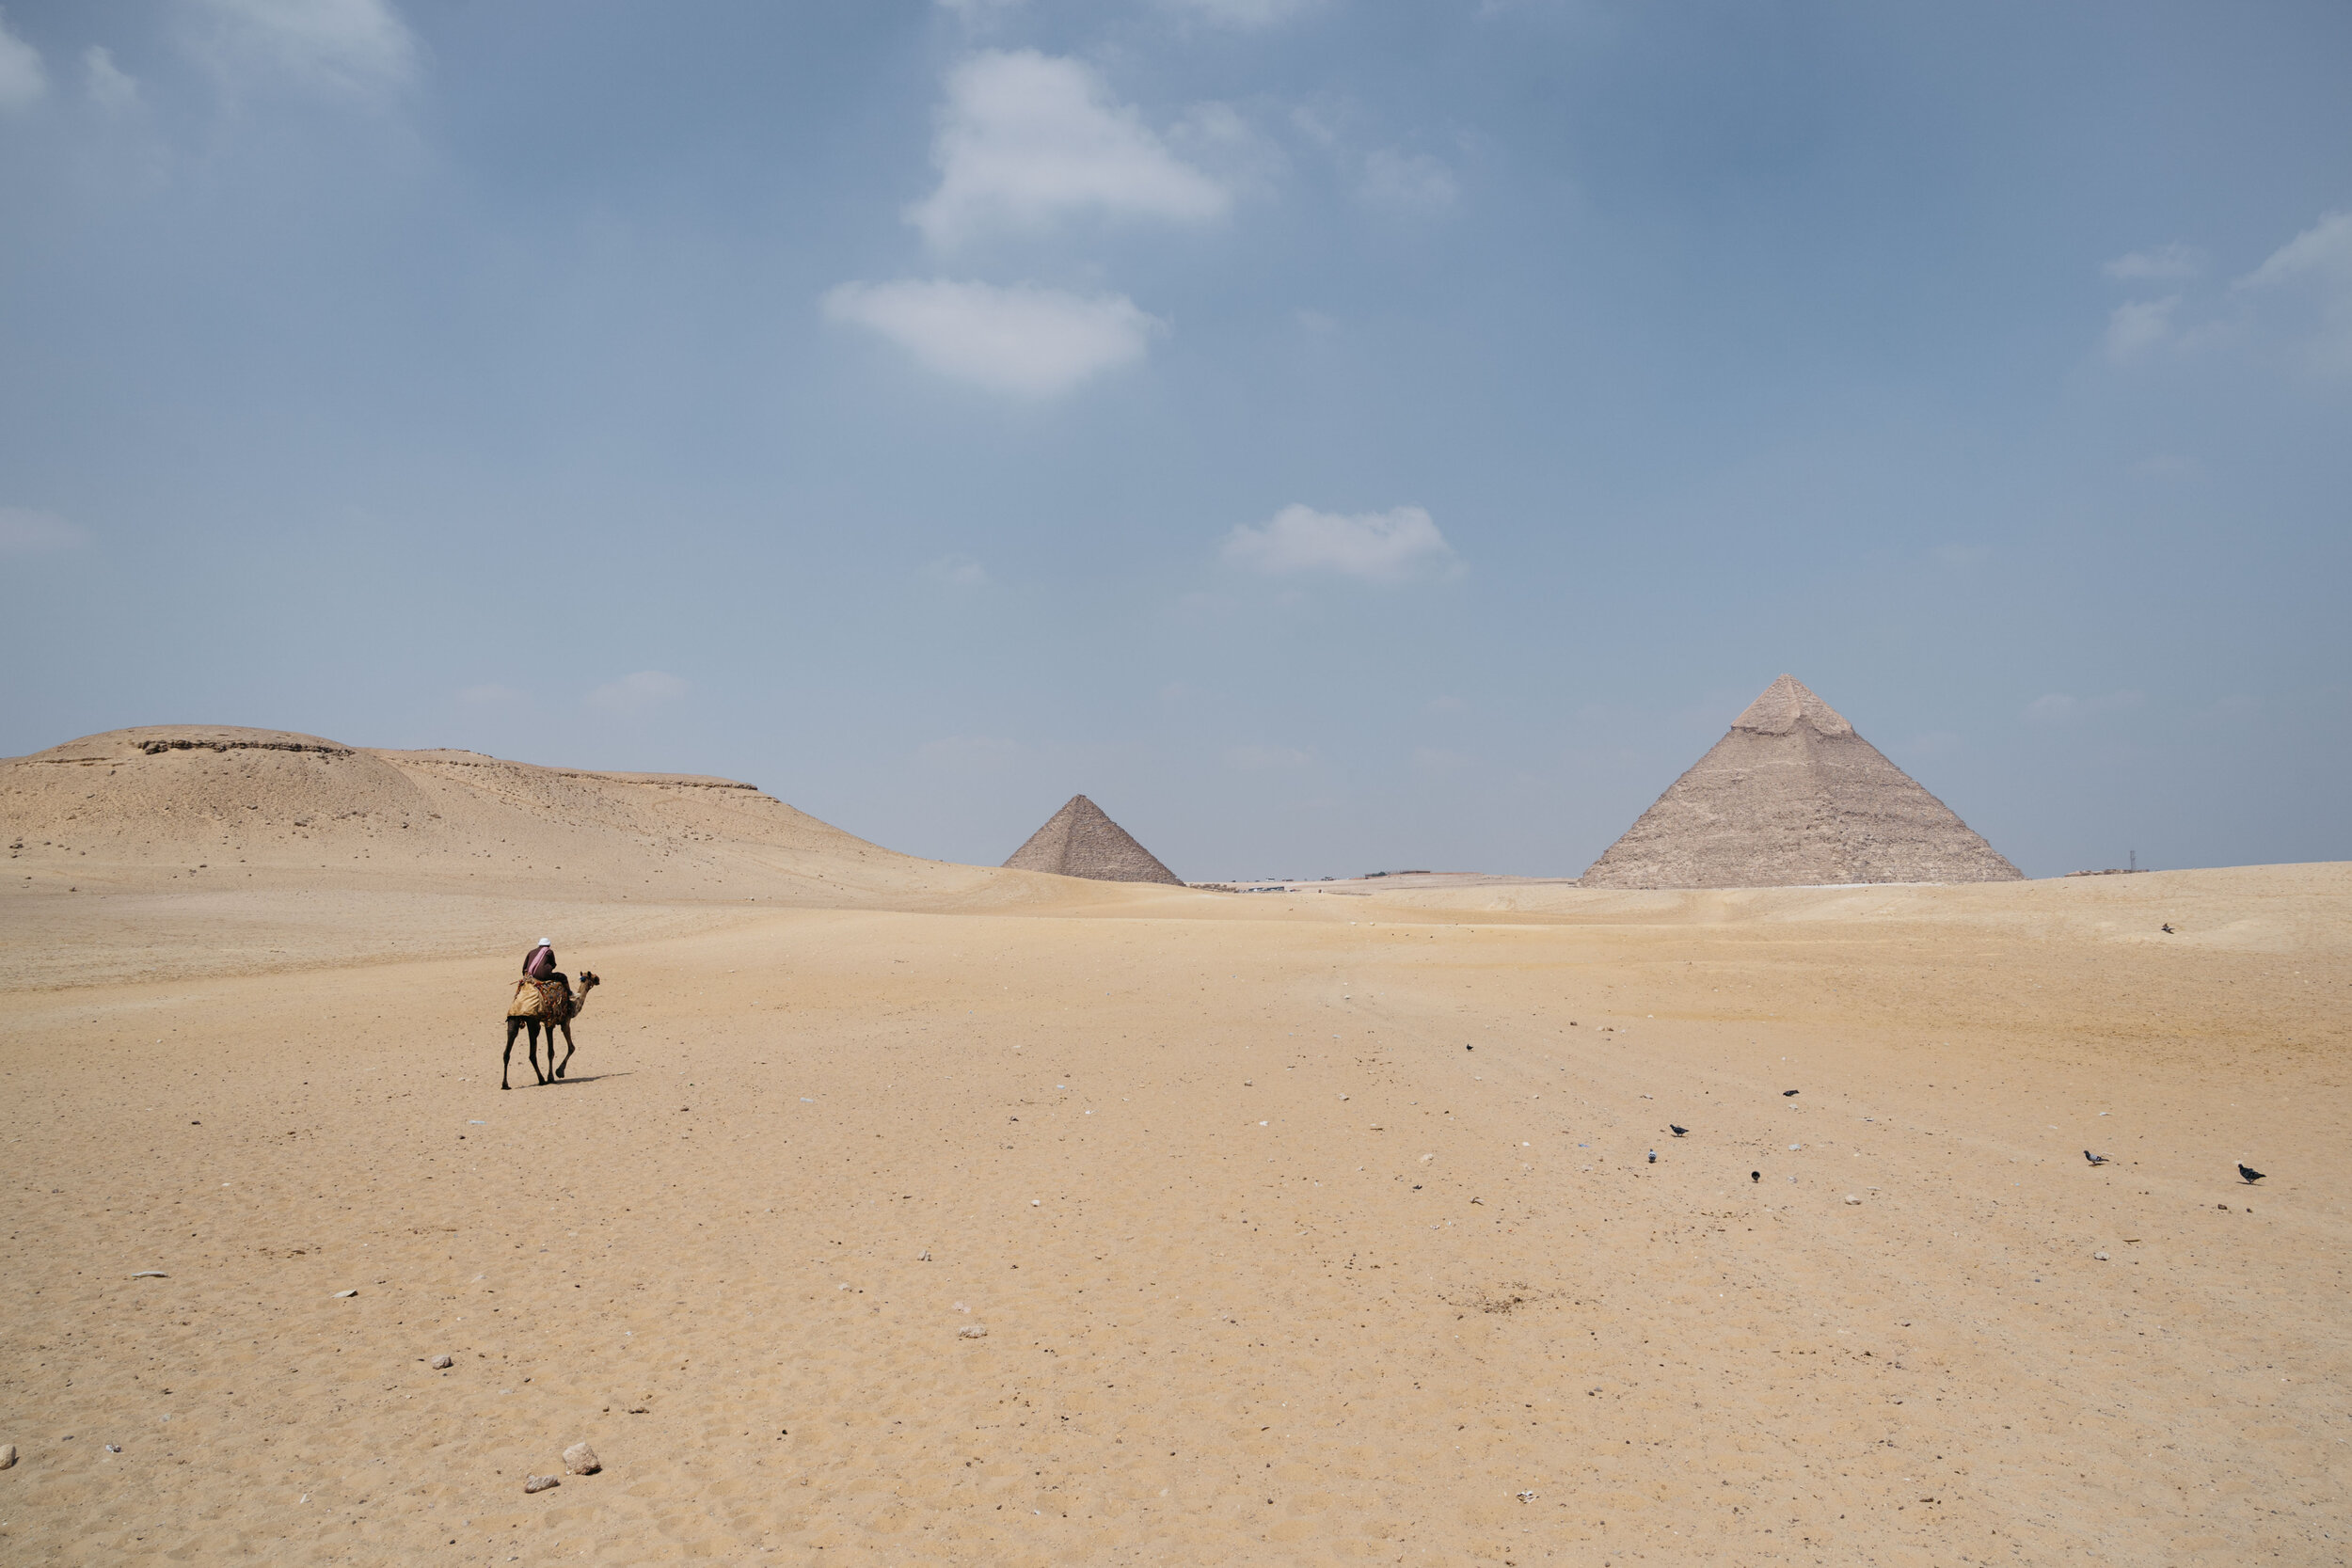 Pyramids, Cairo